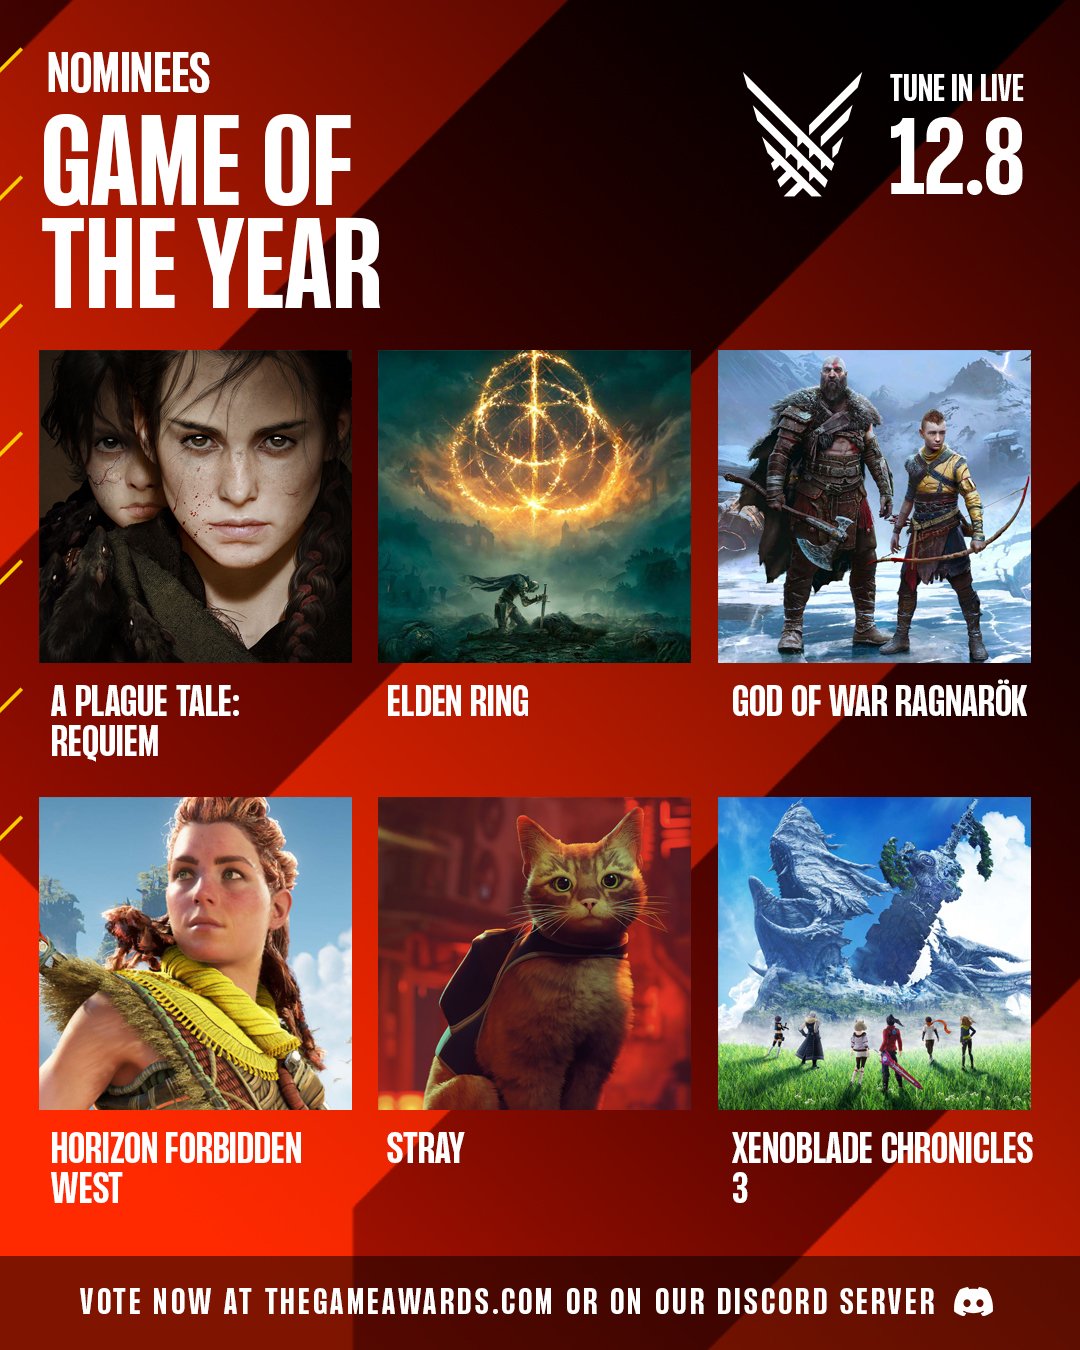 The Game Awards 2022: Elden Ring GOTY & All Winners 